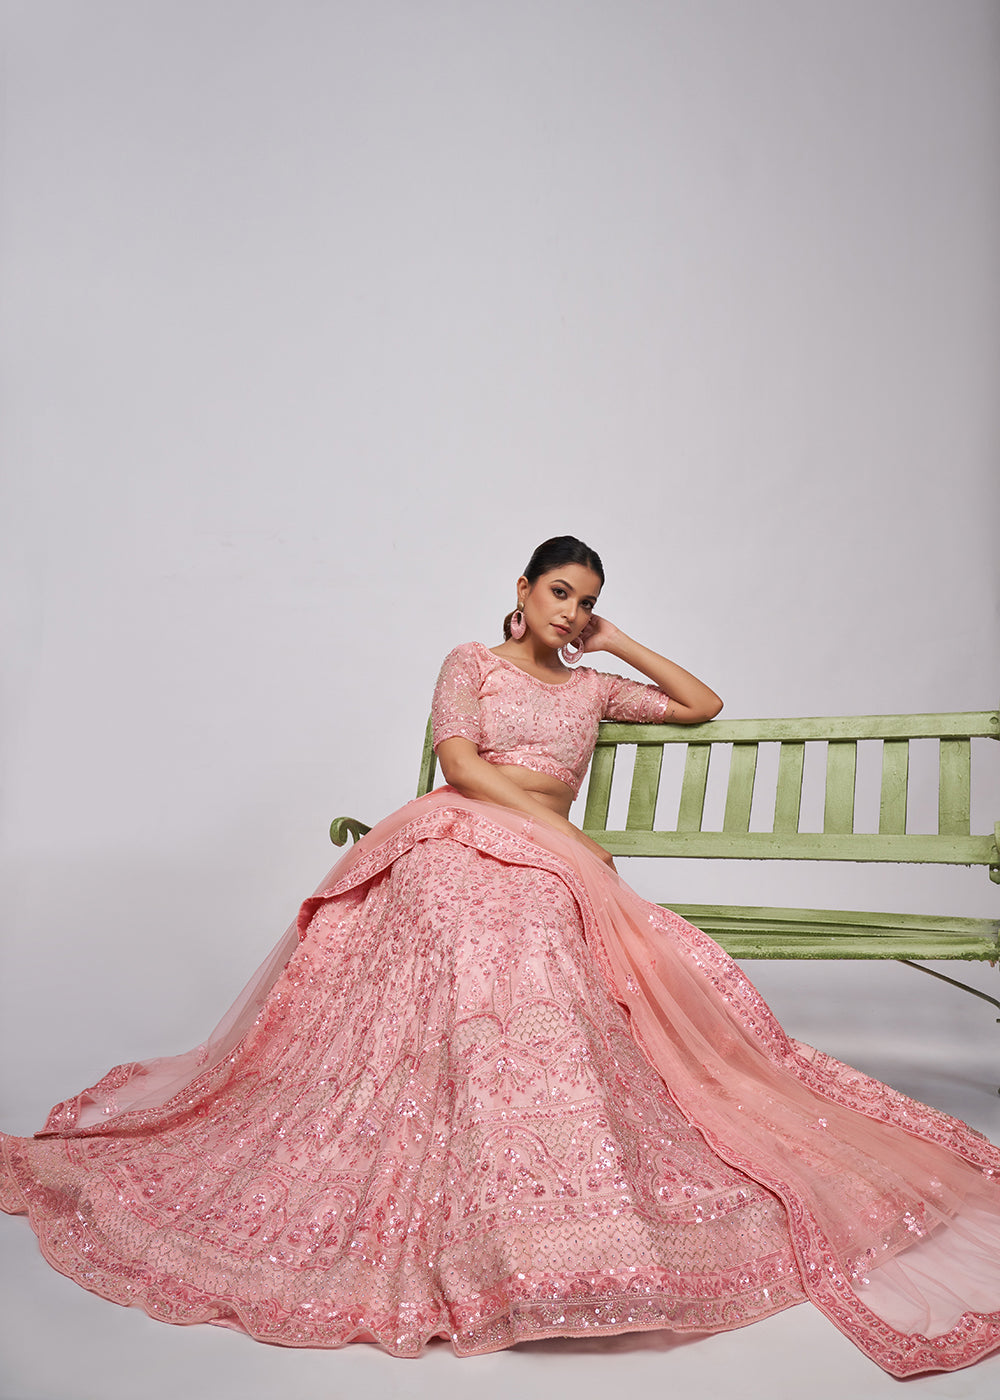 Buy Now Designer Pink Floral Embroidered Bridal Lehenga Choli Online in USA, UK, Canada & Worldwide at Empress Clothing.